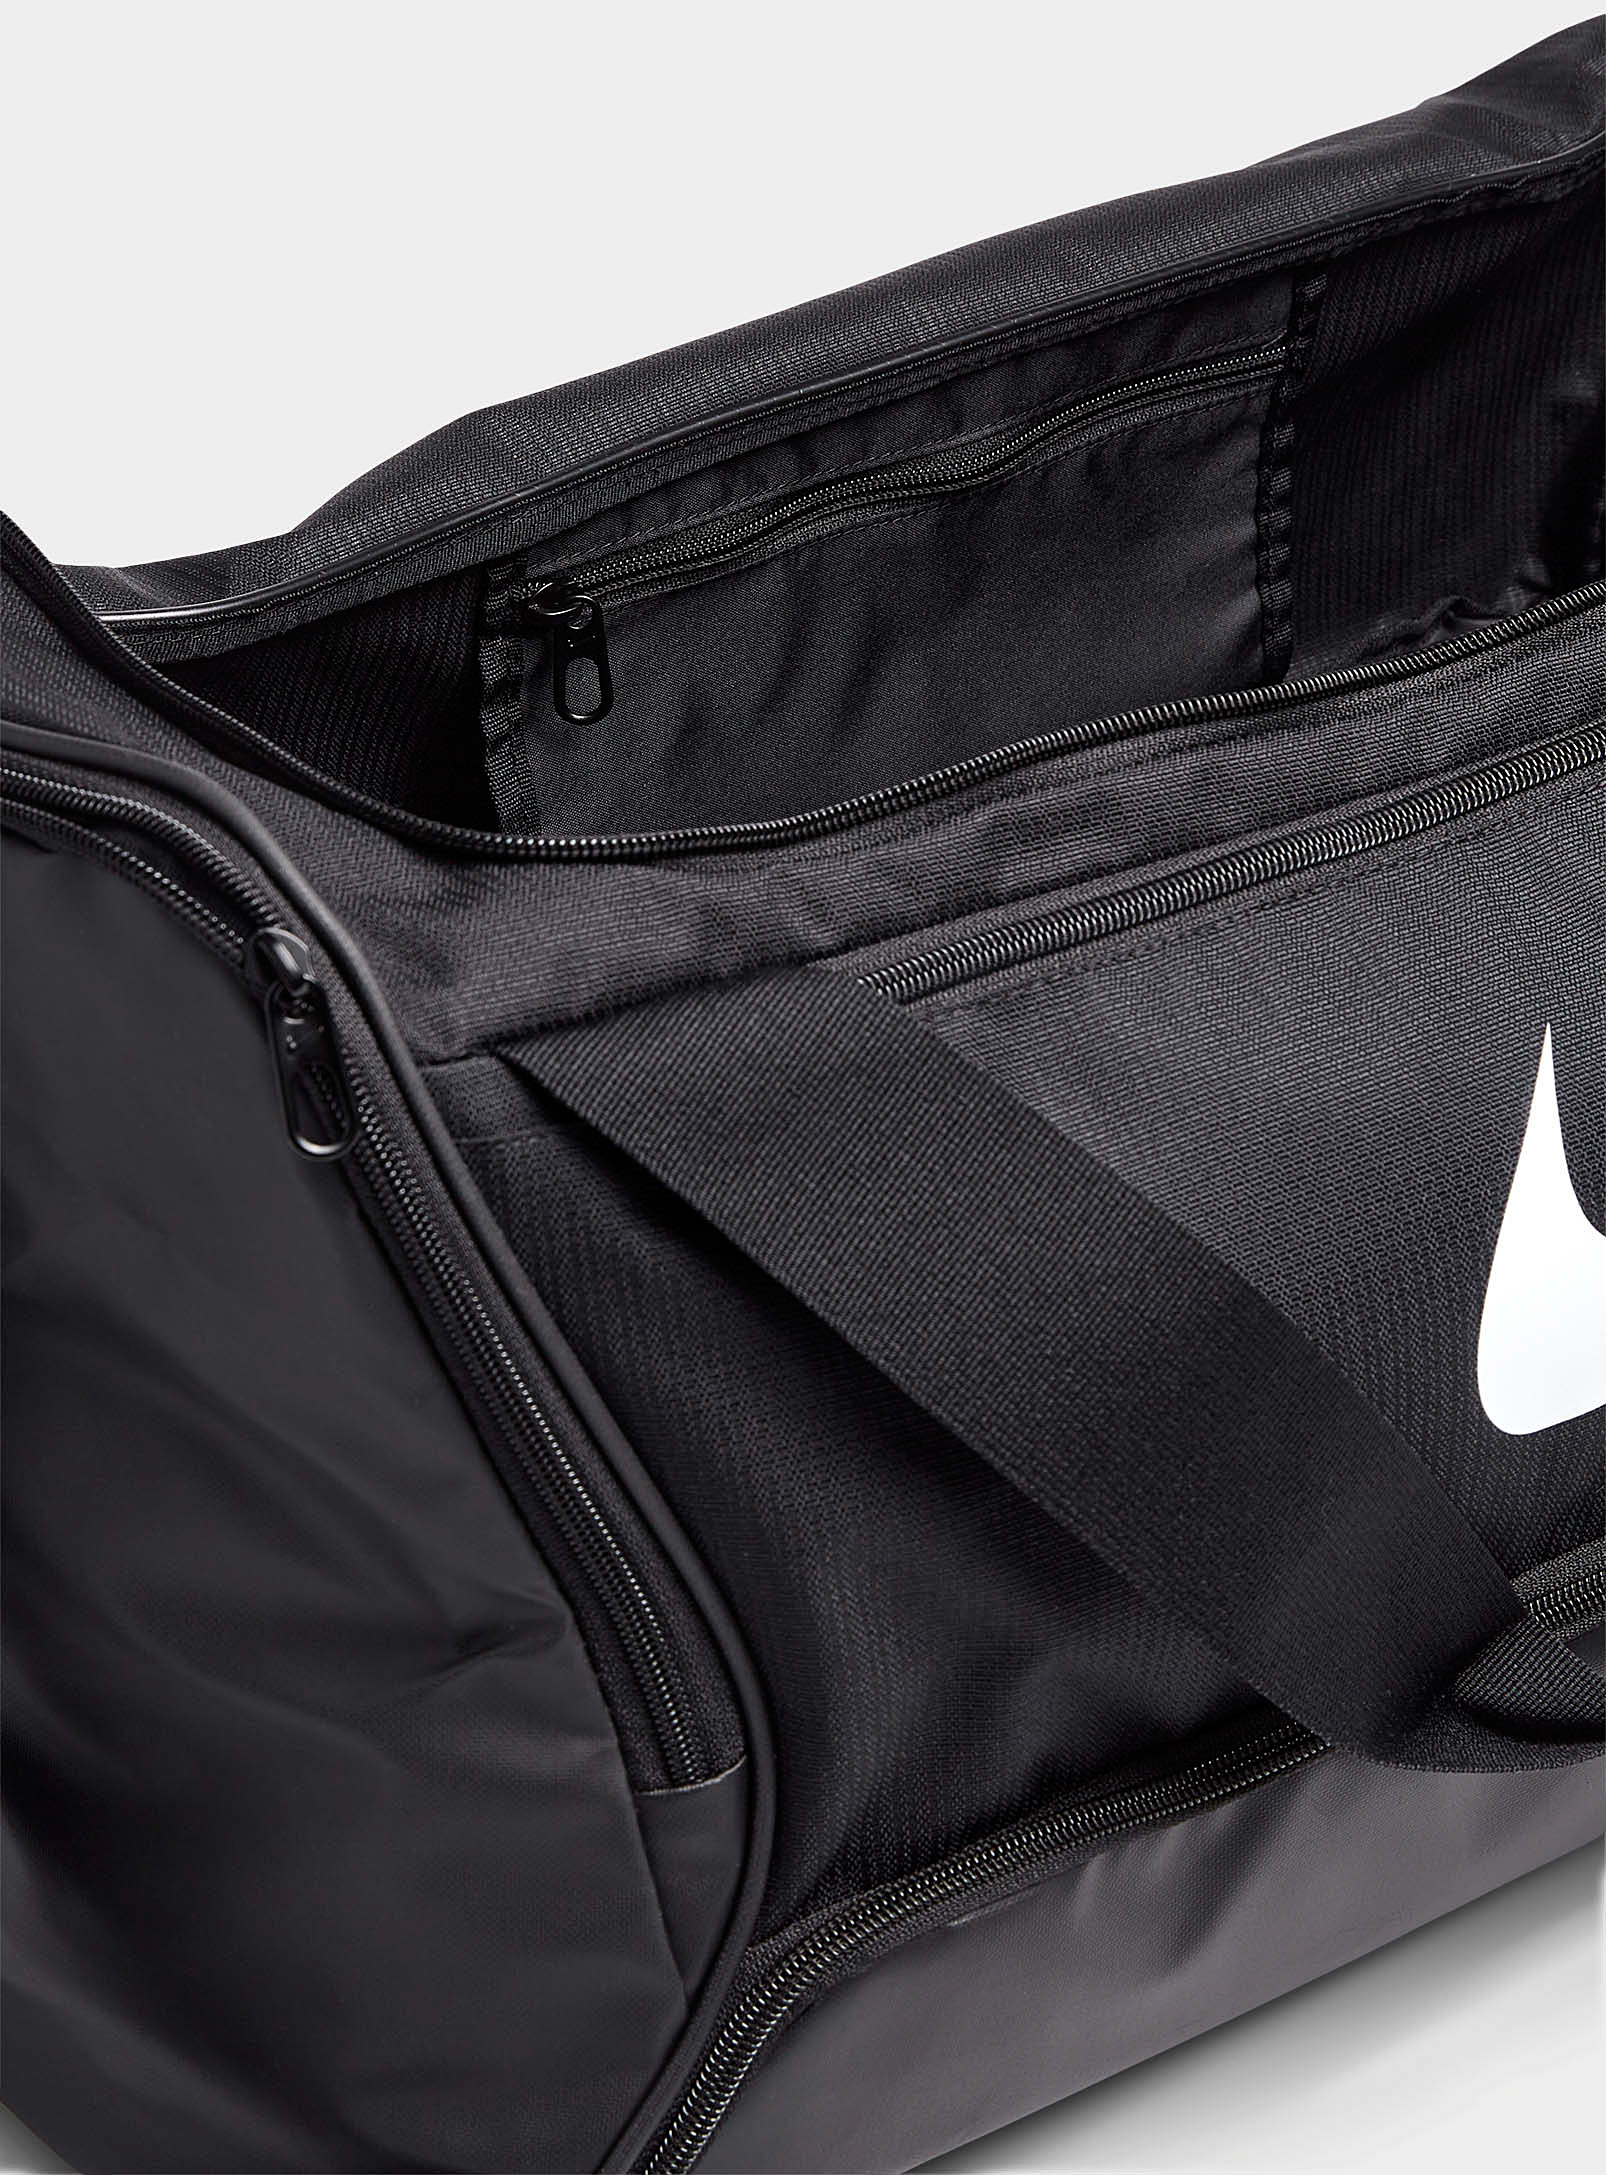 Nike - Le sac de sport Brasilia